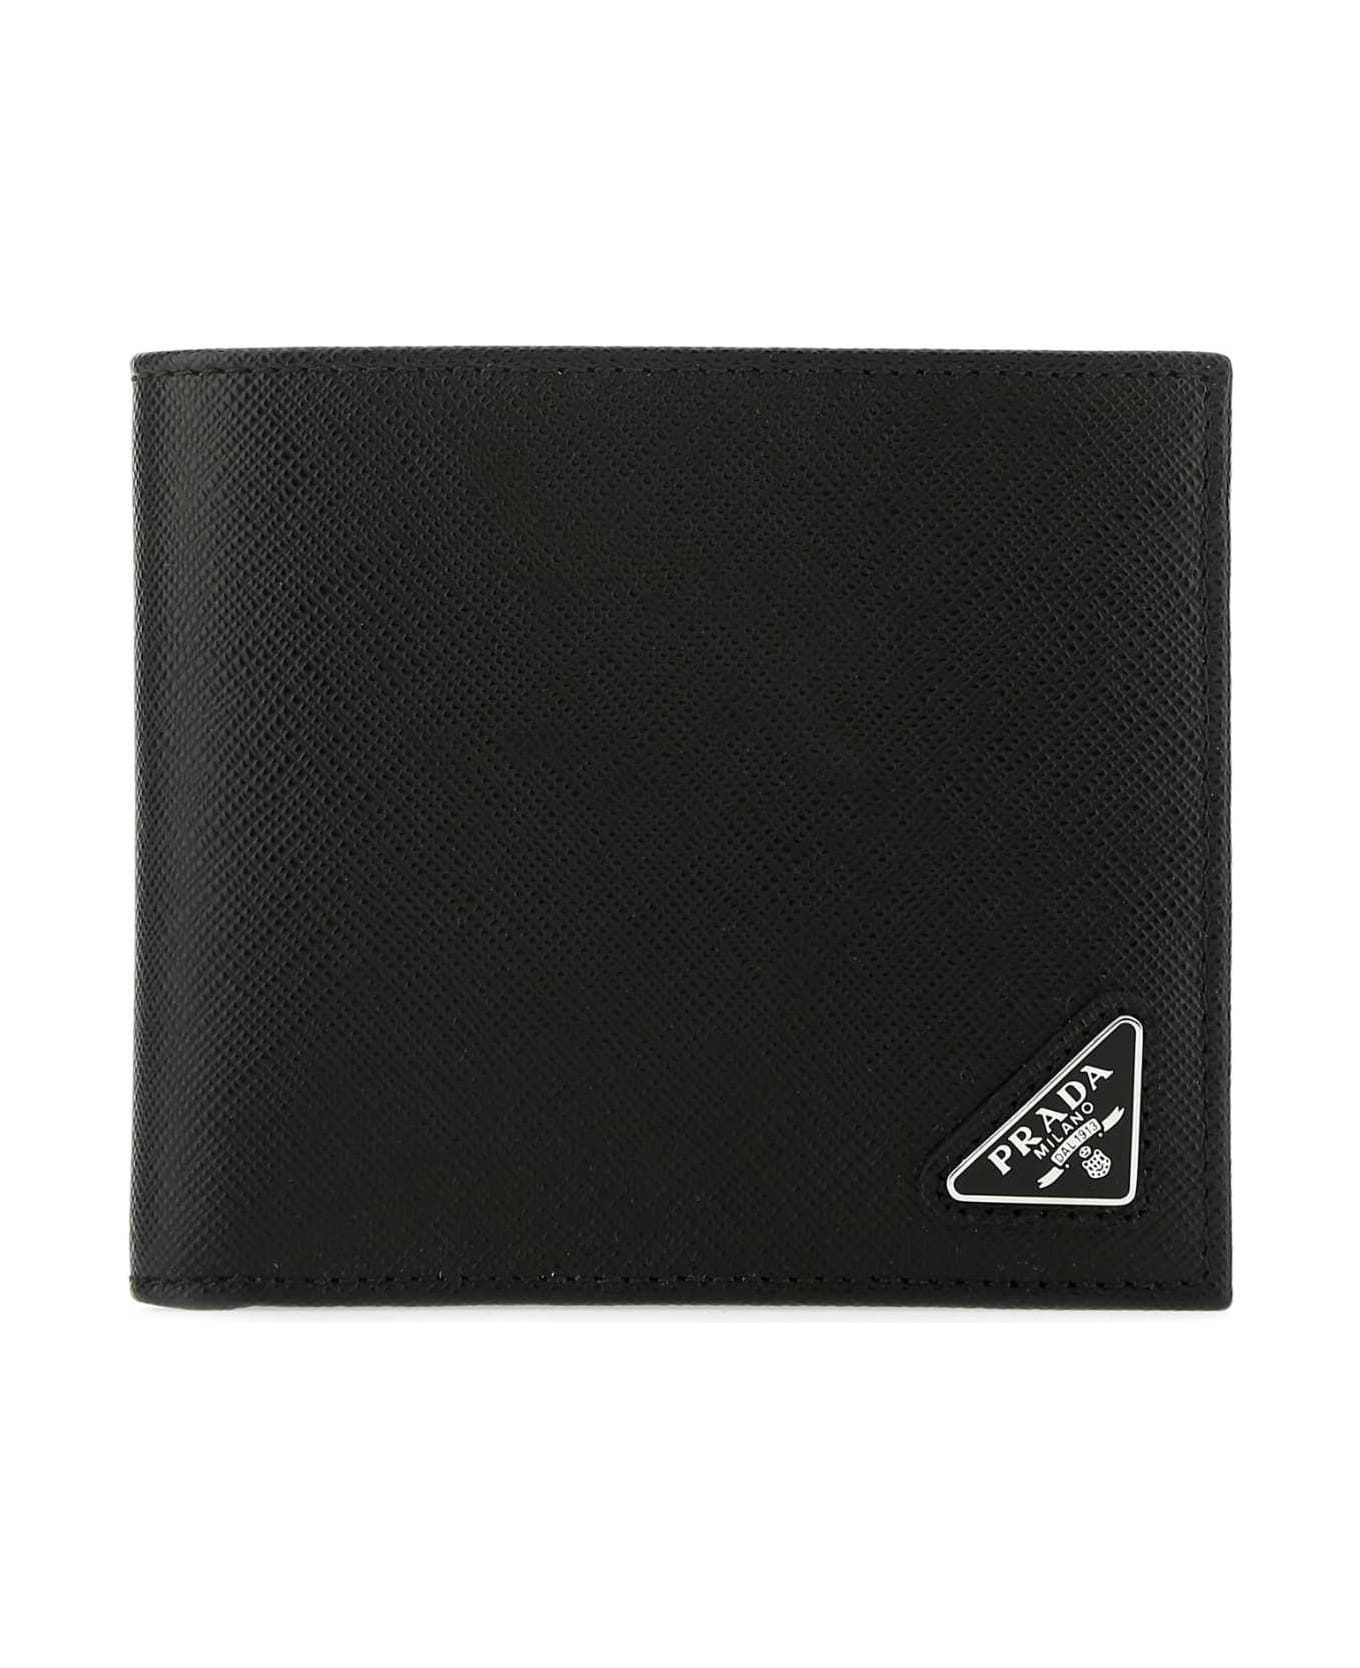 Prada Black Leather Wallet - F0002